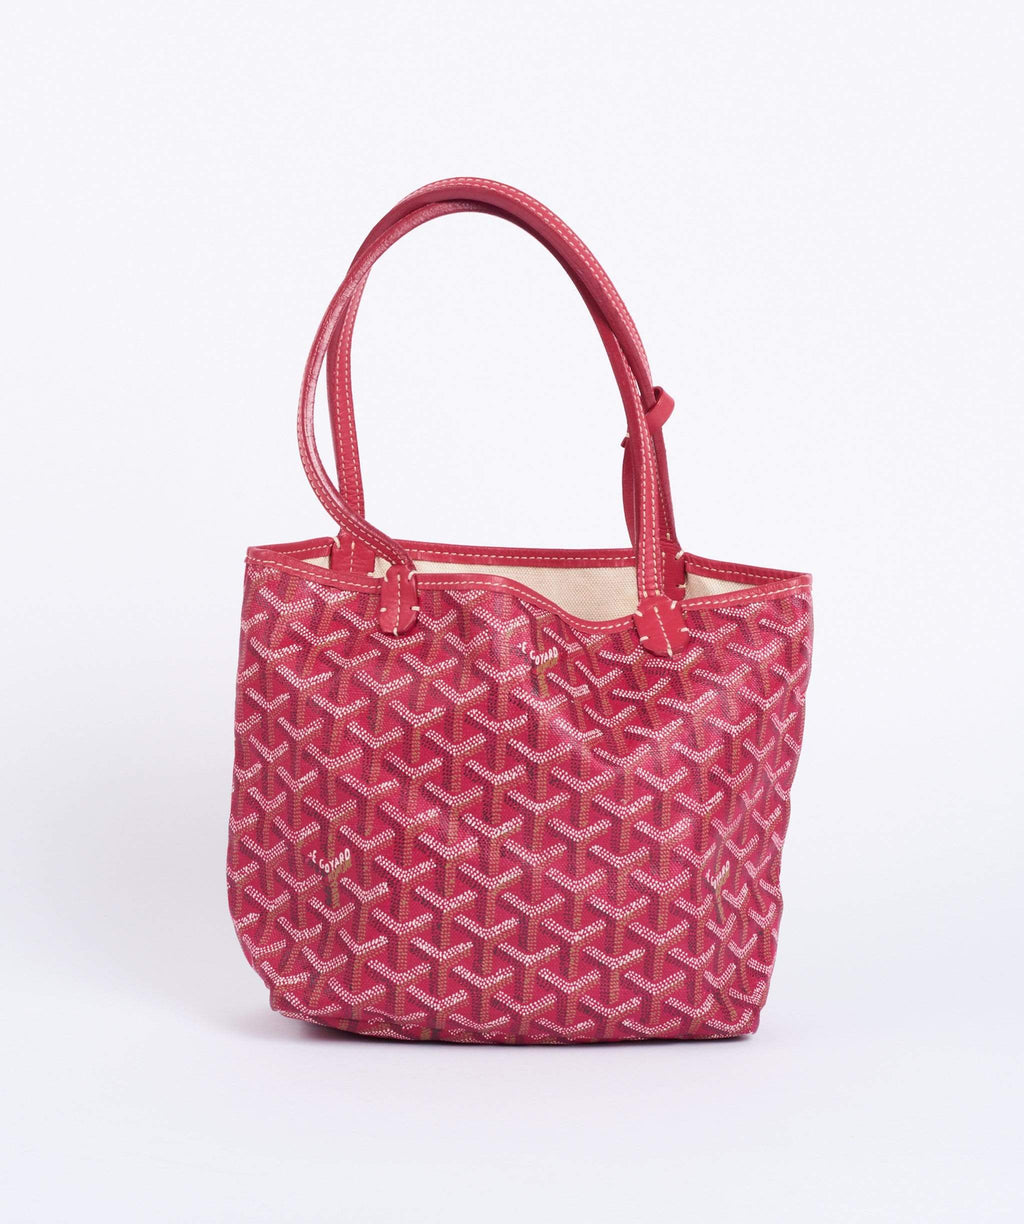 Goyard Medium Tote Bags for Women, Authenticity Guaranteed